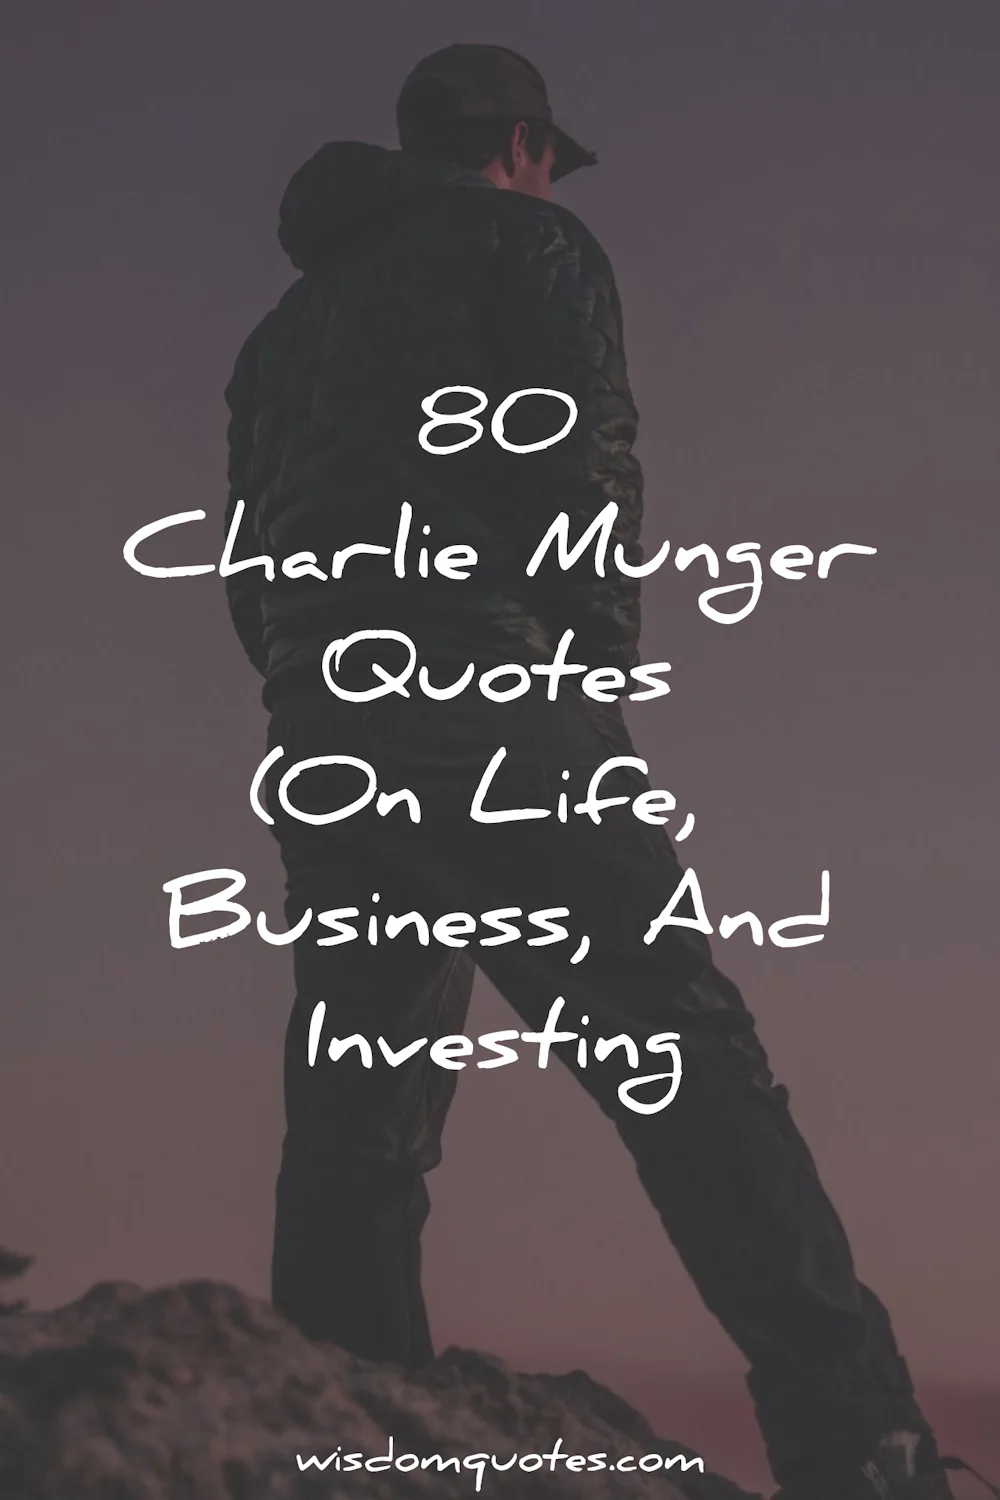 charlie munger quotes wisdom